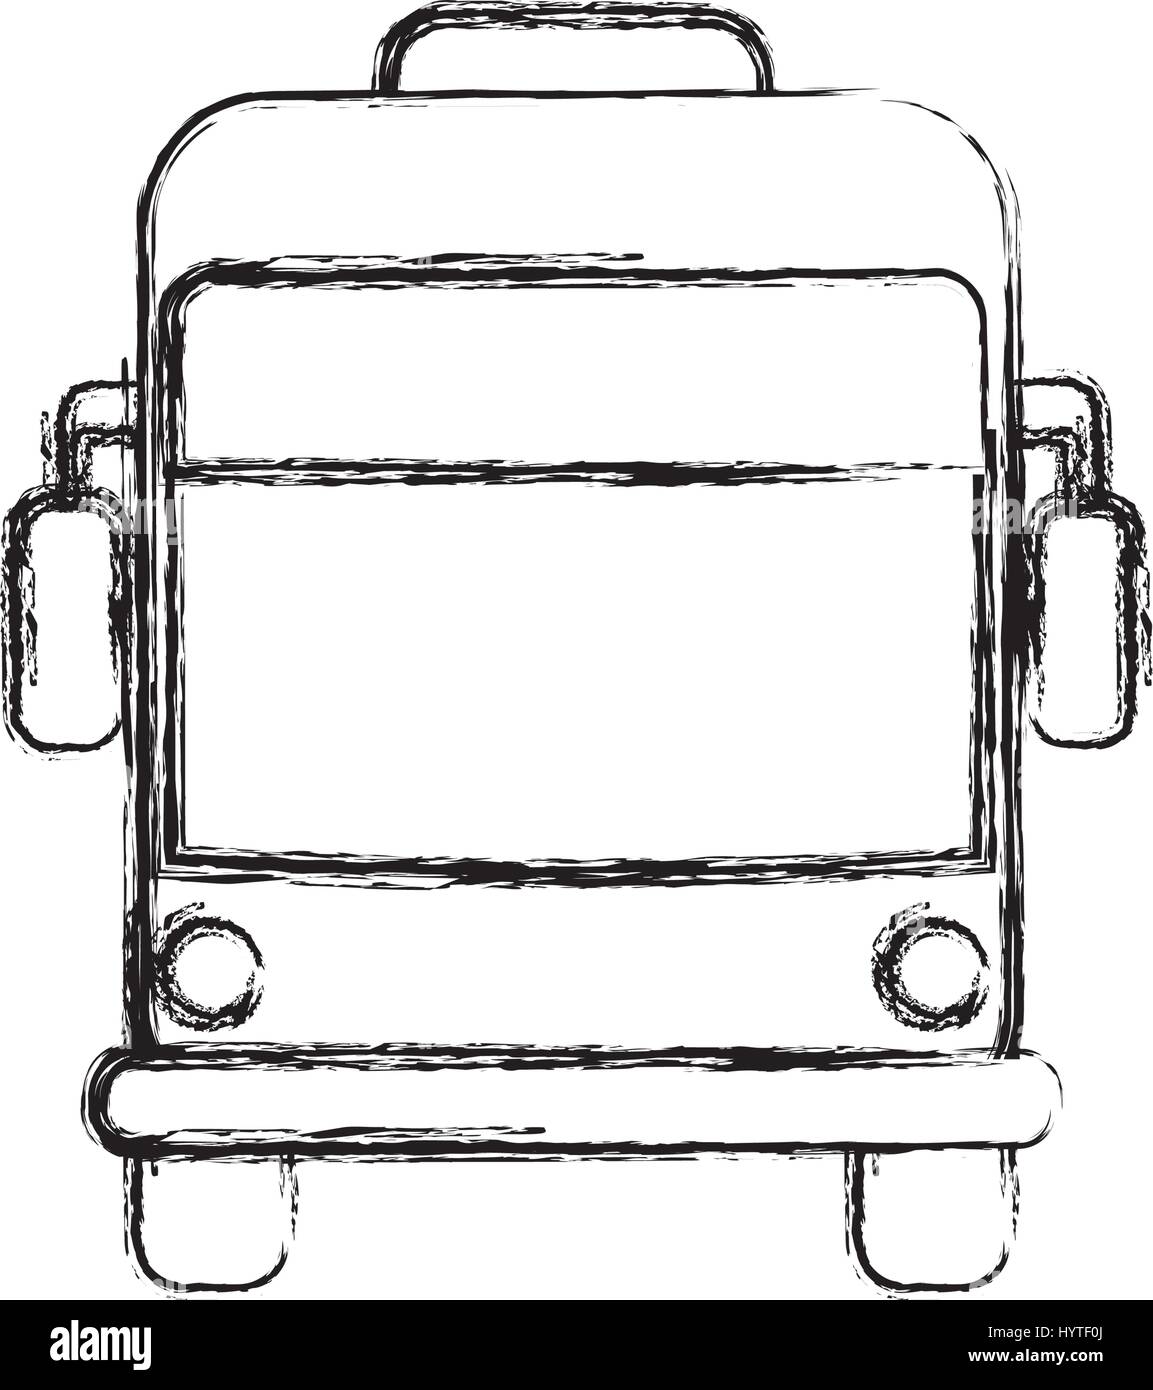 Bus ÖPNV Symbol Vektor Illustration Grafik-design Stock Vektor